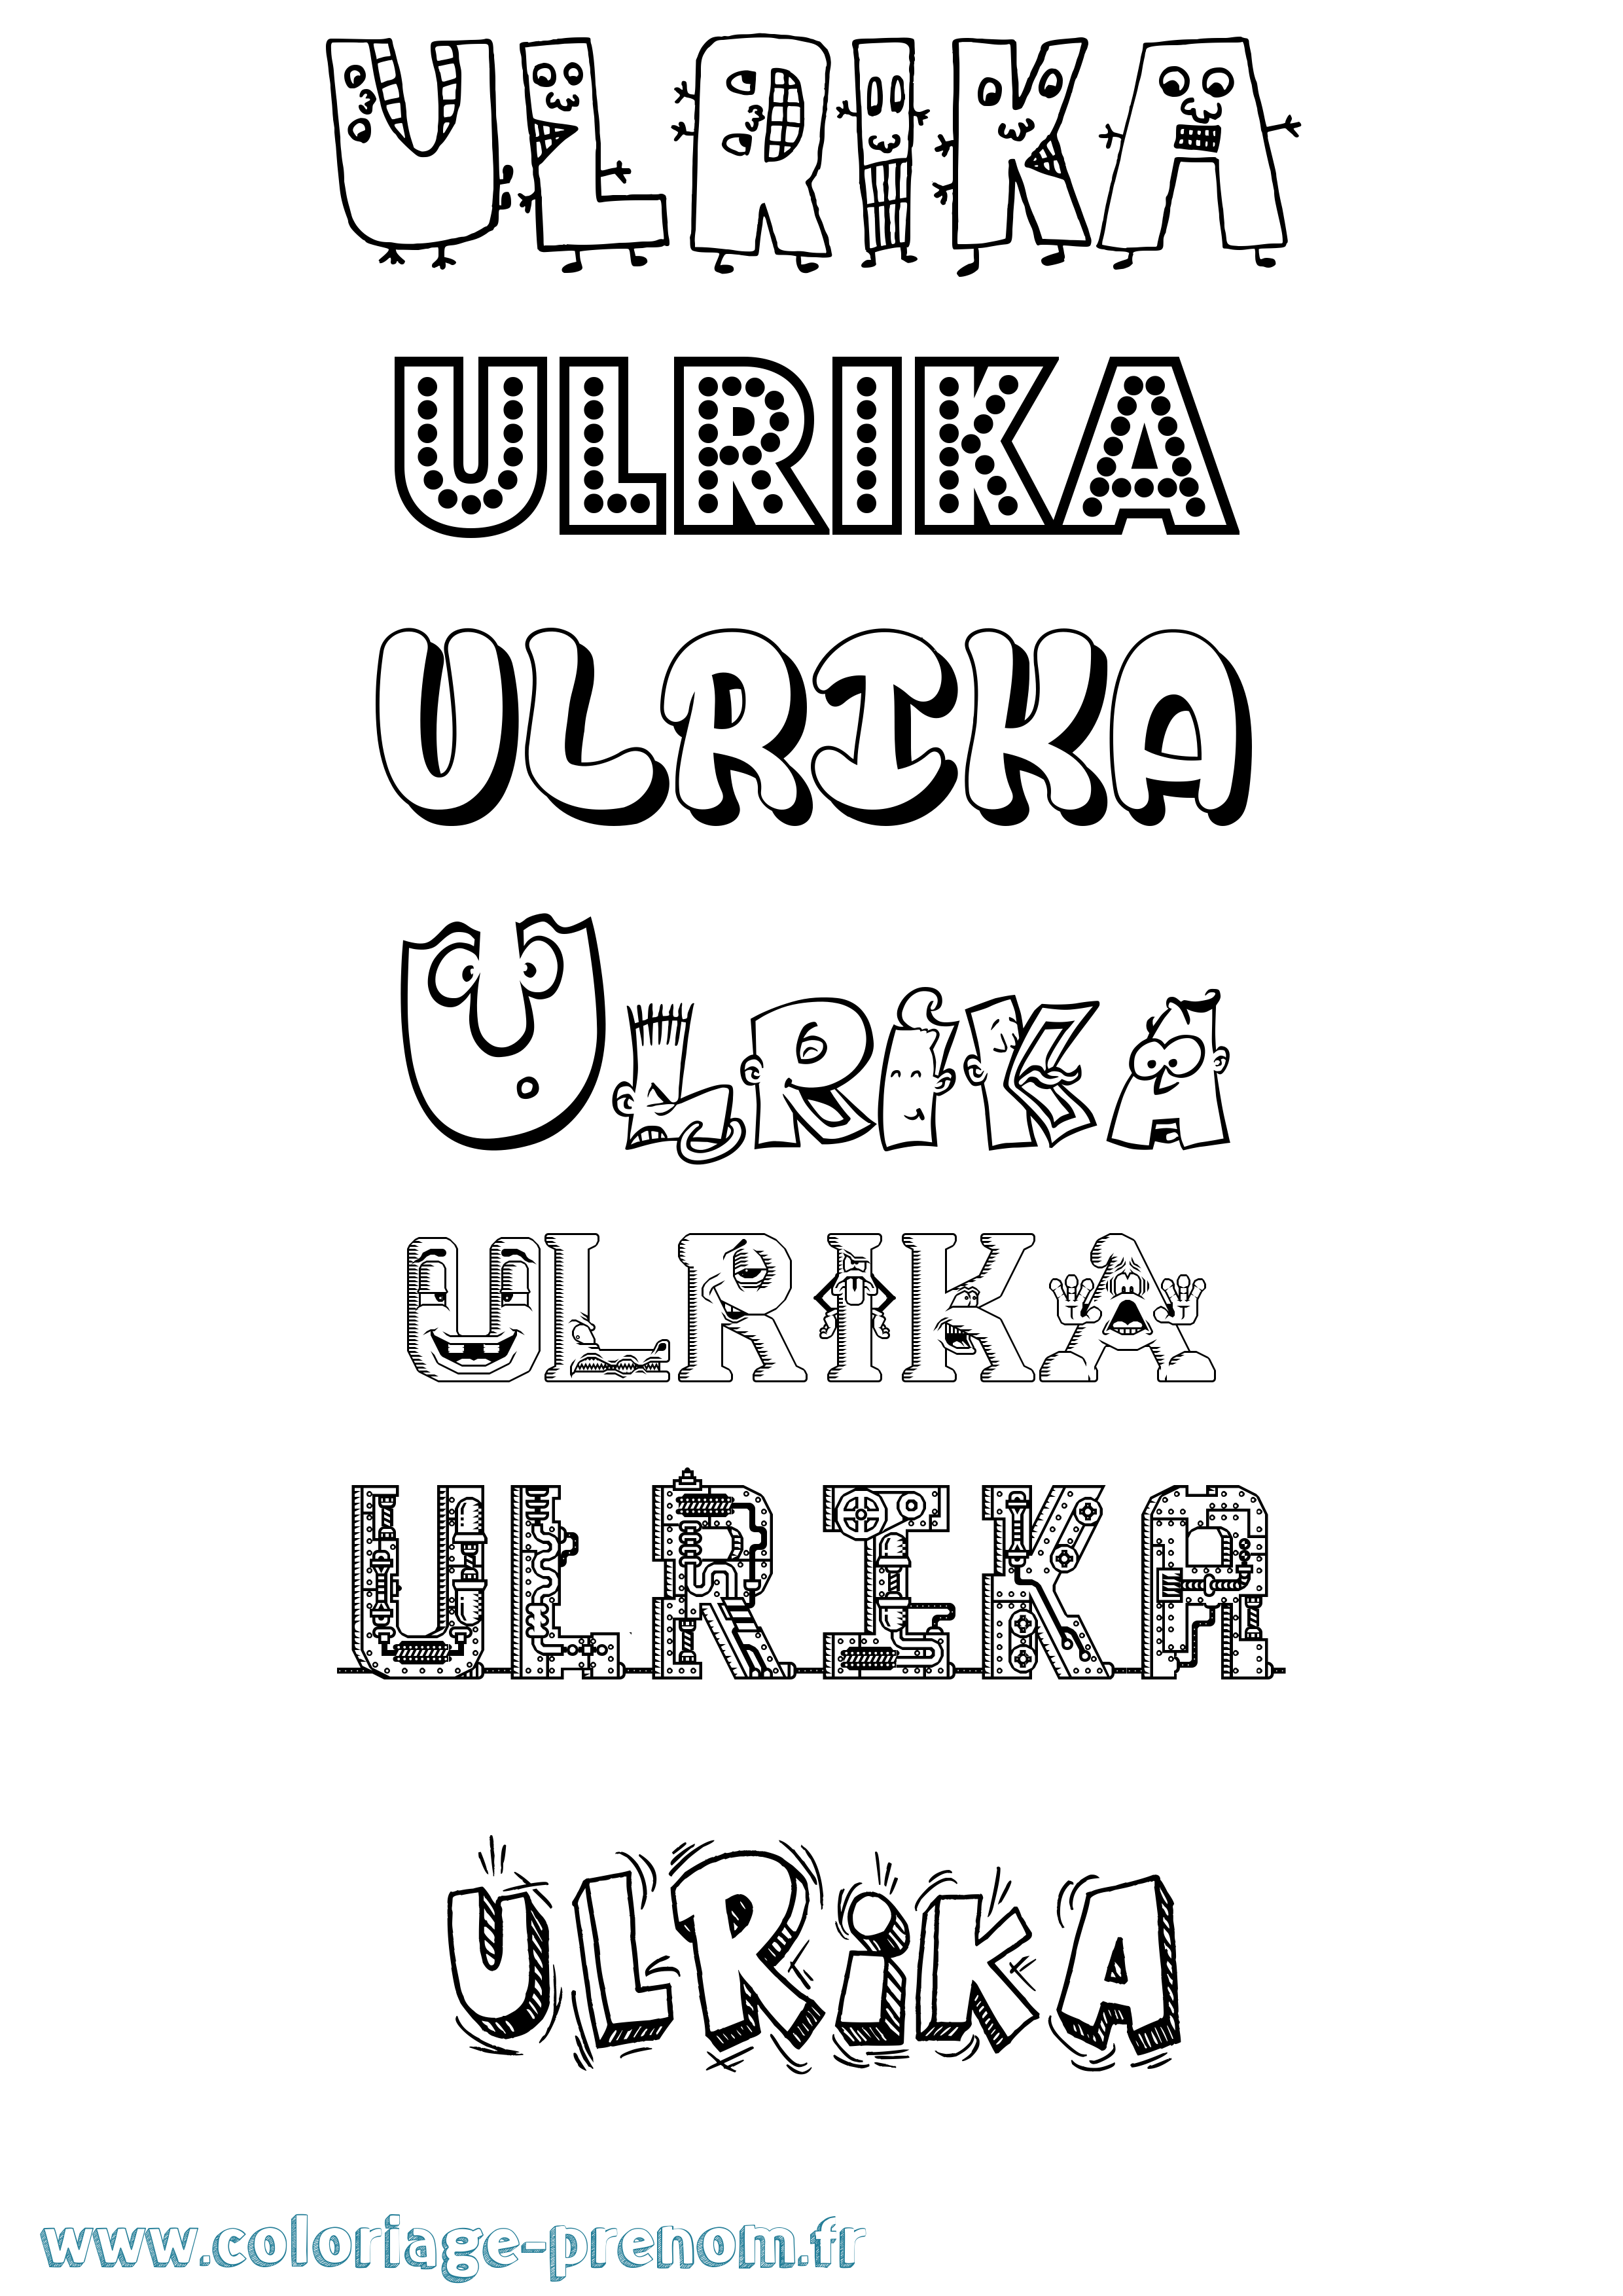 Coloriage prénom Ulrika Fun